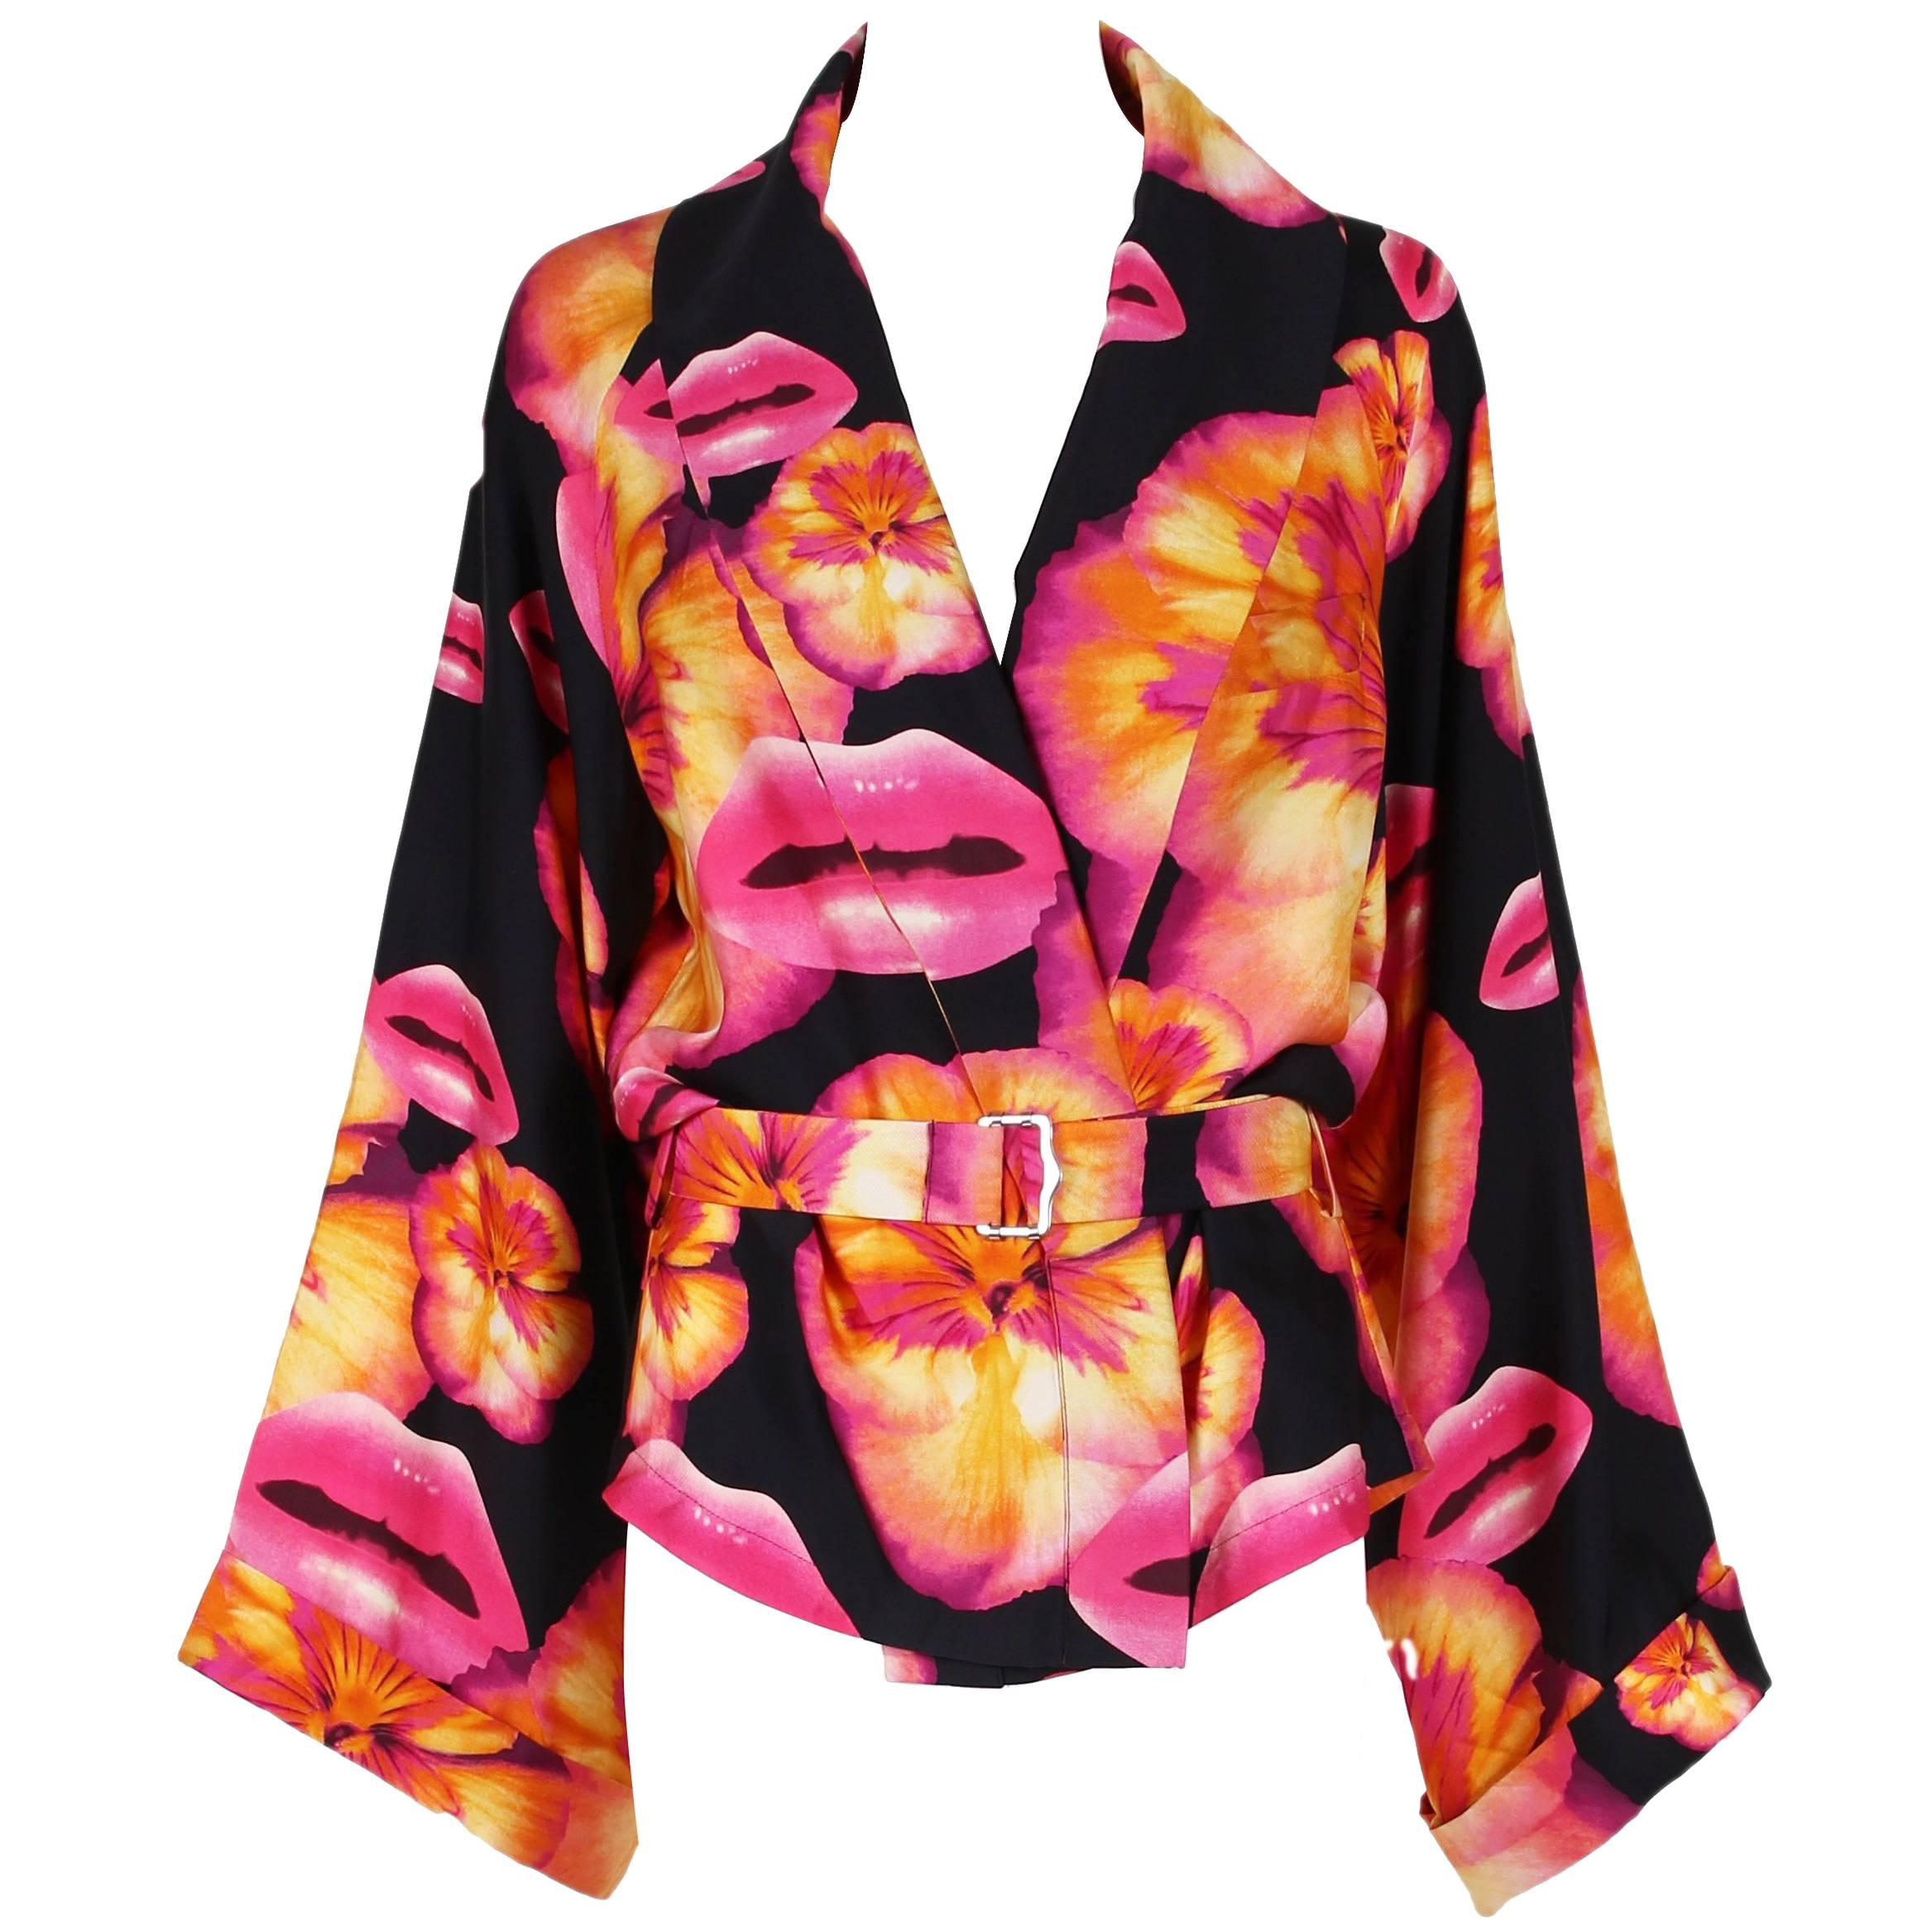 Christian Dior by Joh Galliano Silk Lip & Flower Print Kimono Style Top Jacket